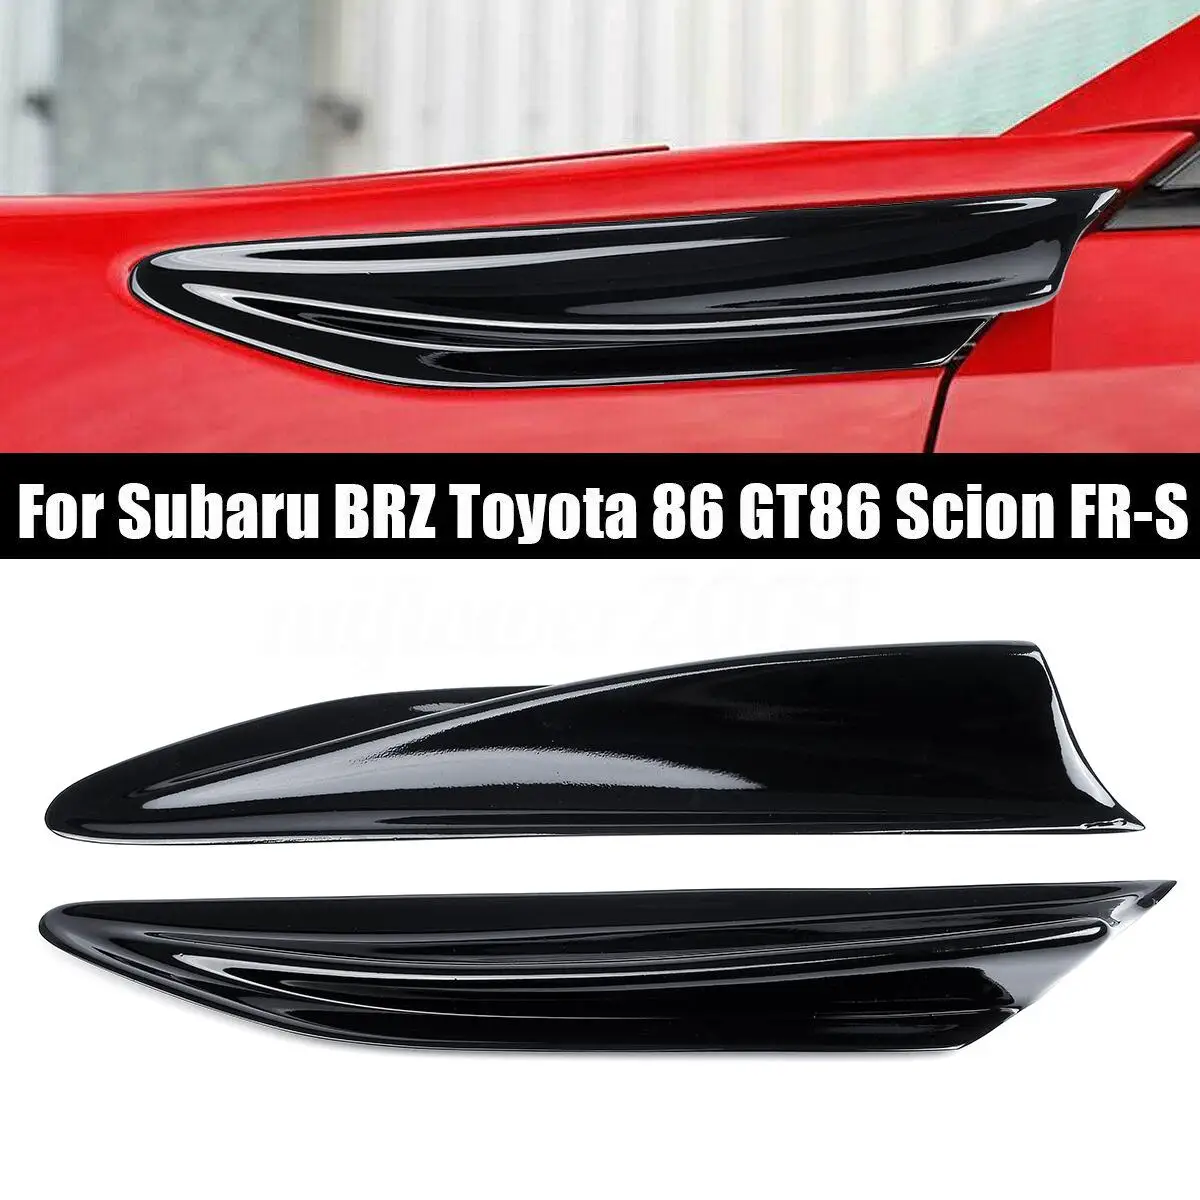 

2pcs Side Fender Fin Vents Cover Trim For Subaru BRZ for Toyota 86 GT86 Scion FR-S Glossy Black Real Carbon Fiber